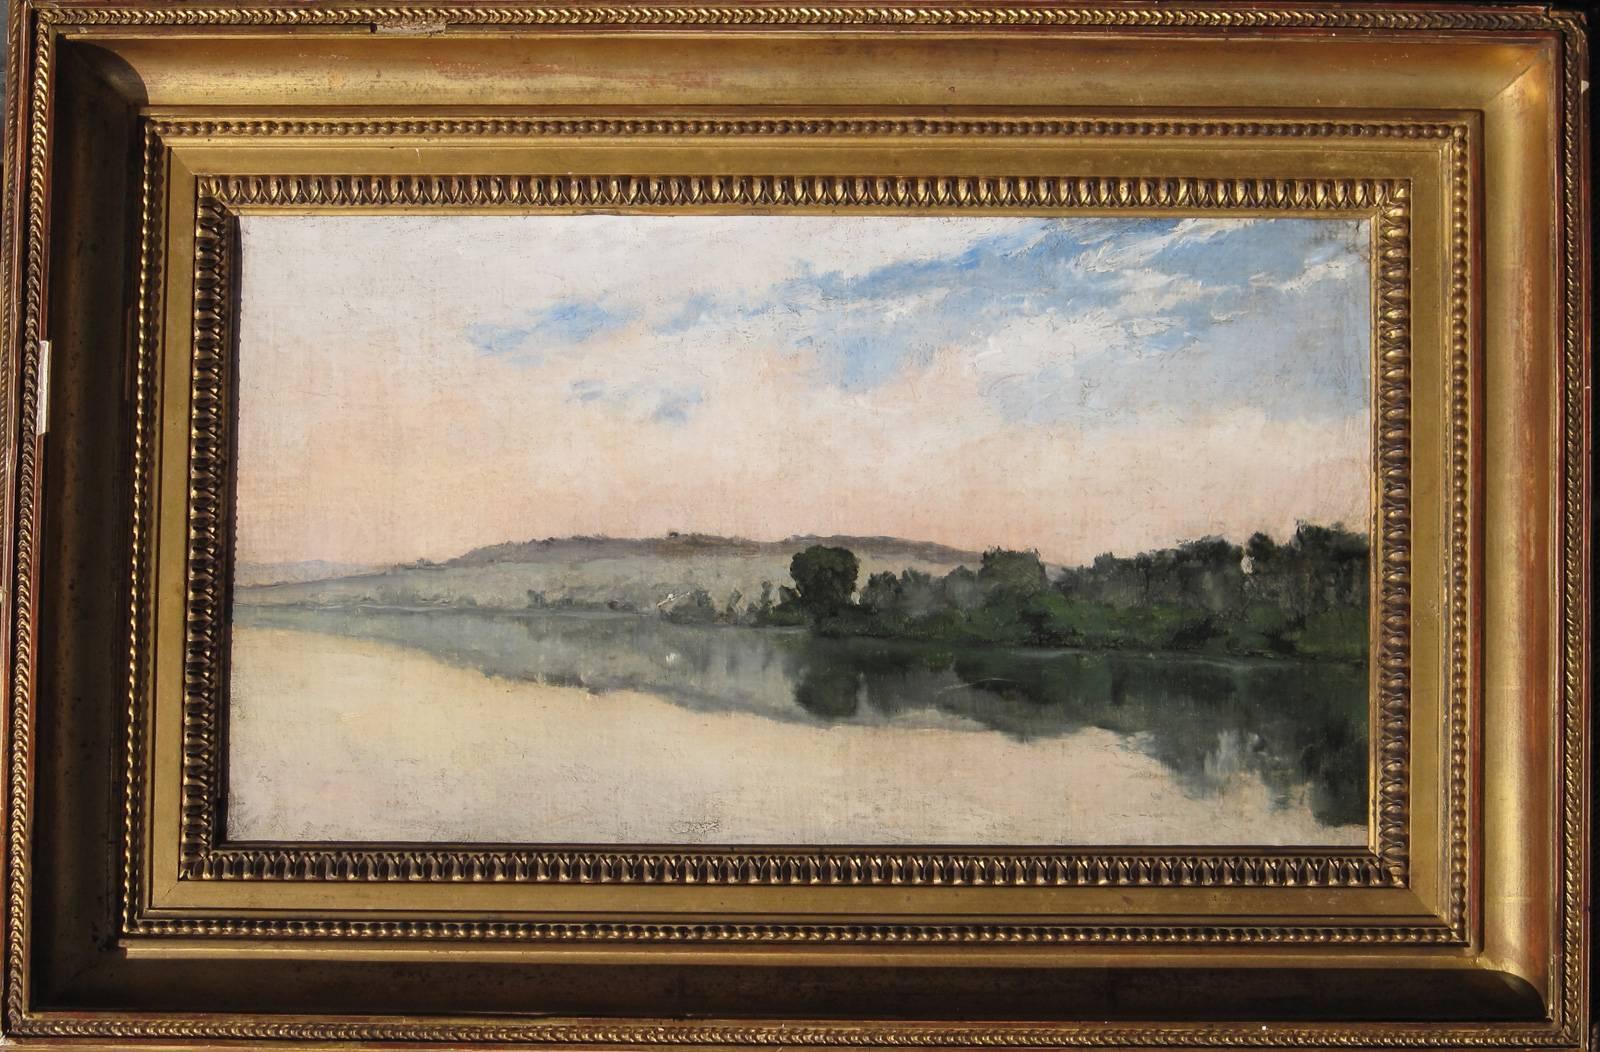 Bords de la Seine - ATTRIBUTED TO RICHARD PARKES BONINGTON  - Painting by Richard Parkes Bonington